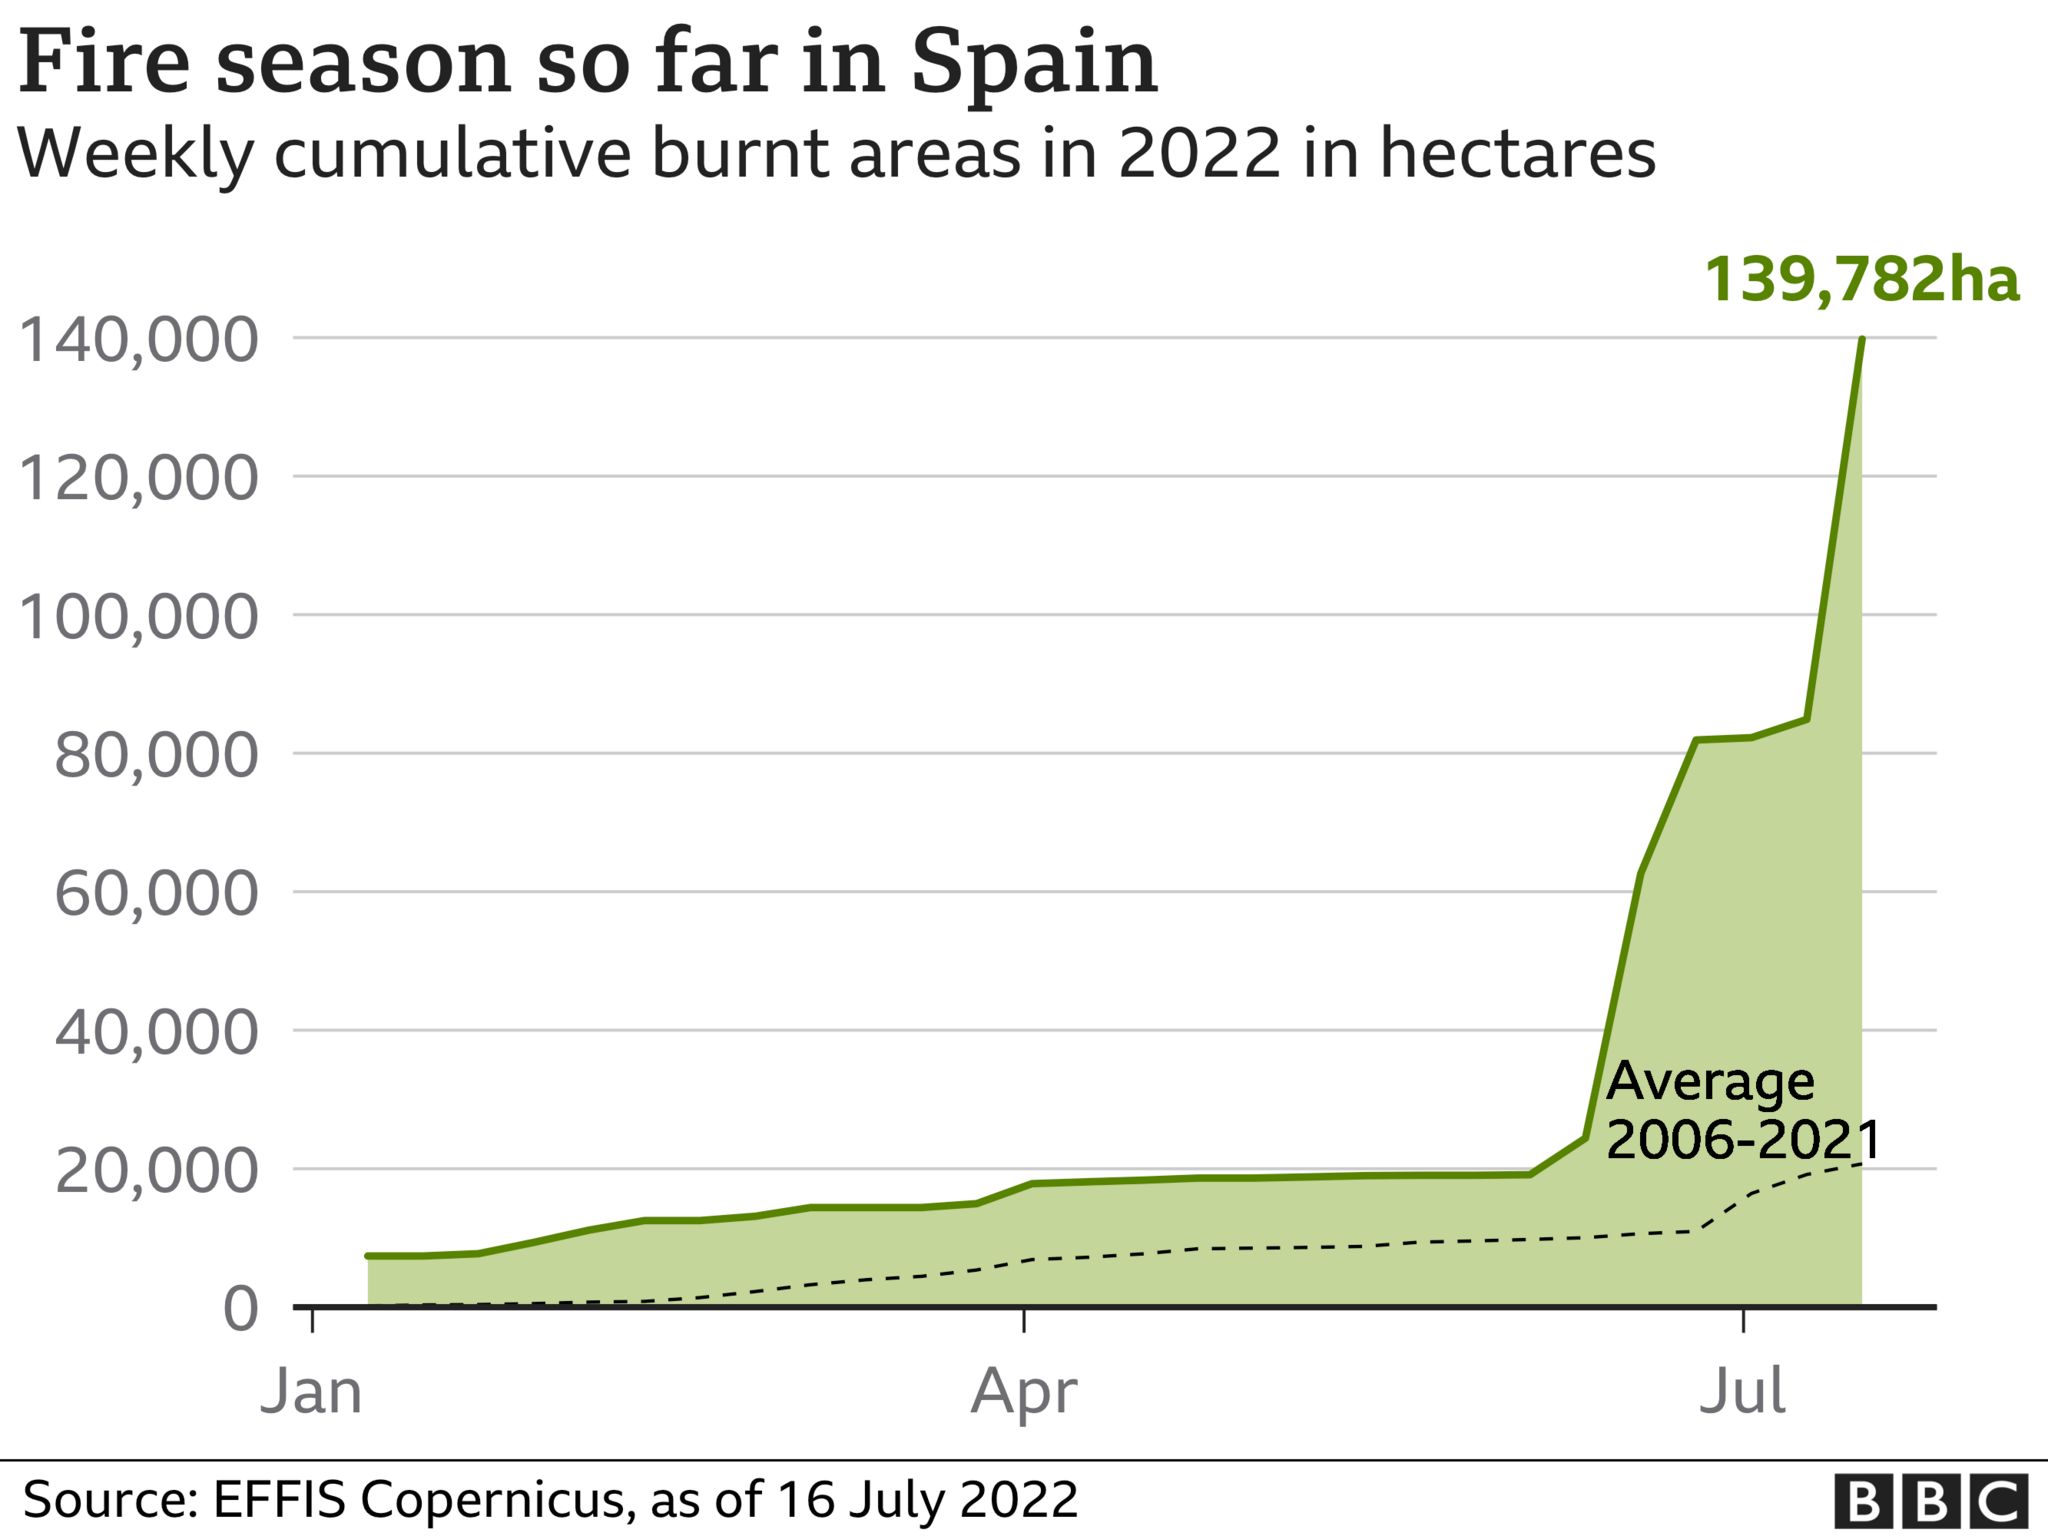 Forest fire season in Spain so far this year